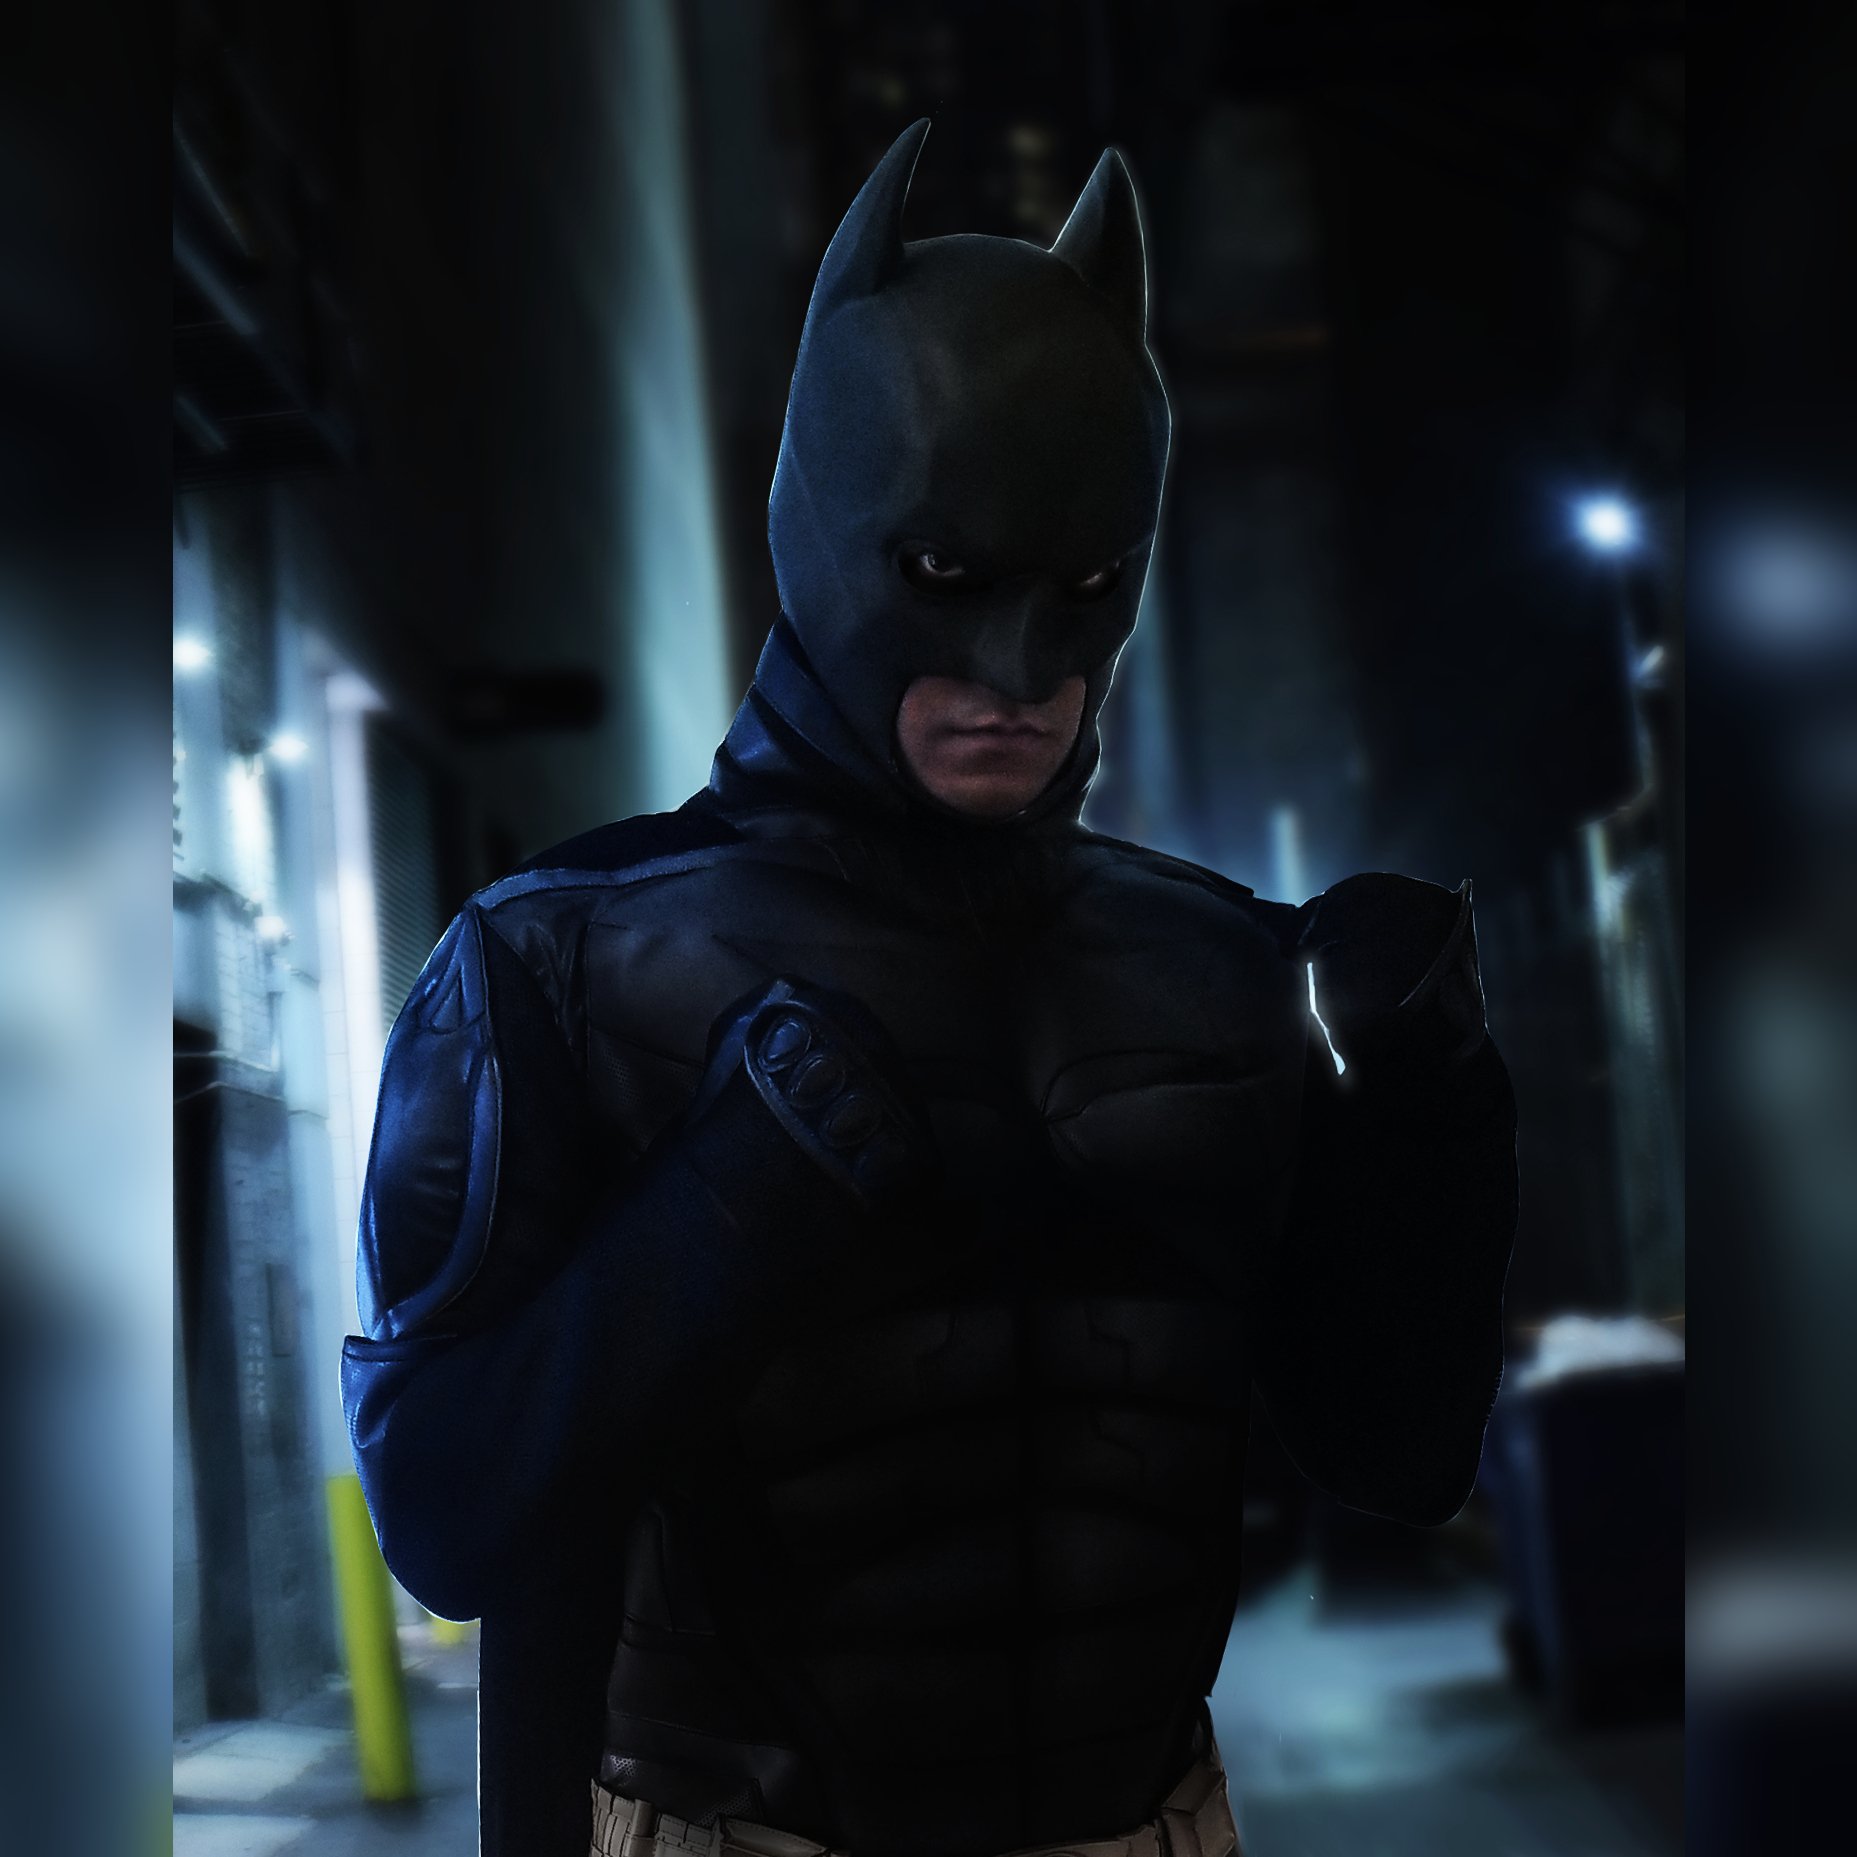 Batman Pose 2b_IG.jpg